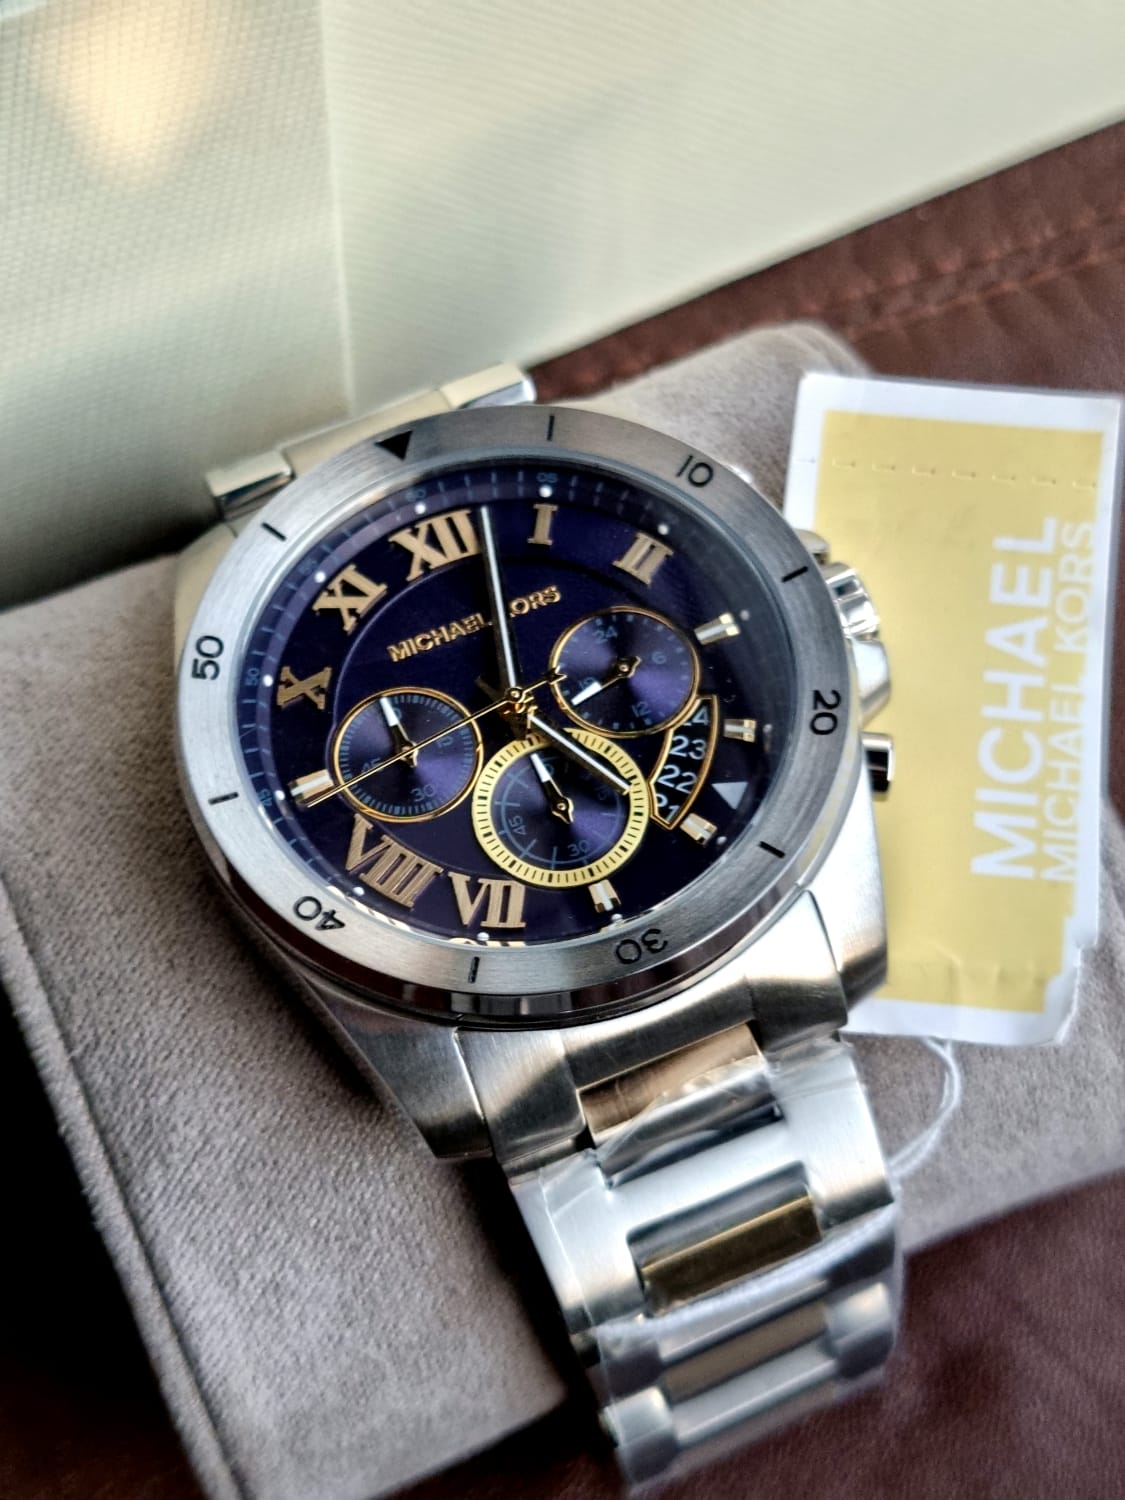 MICHAEL KORS Brecken Chronograph Blue Dial Men's Watch MK8437